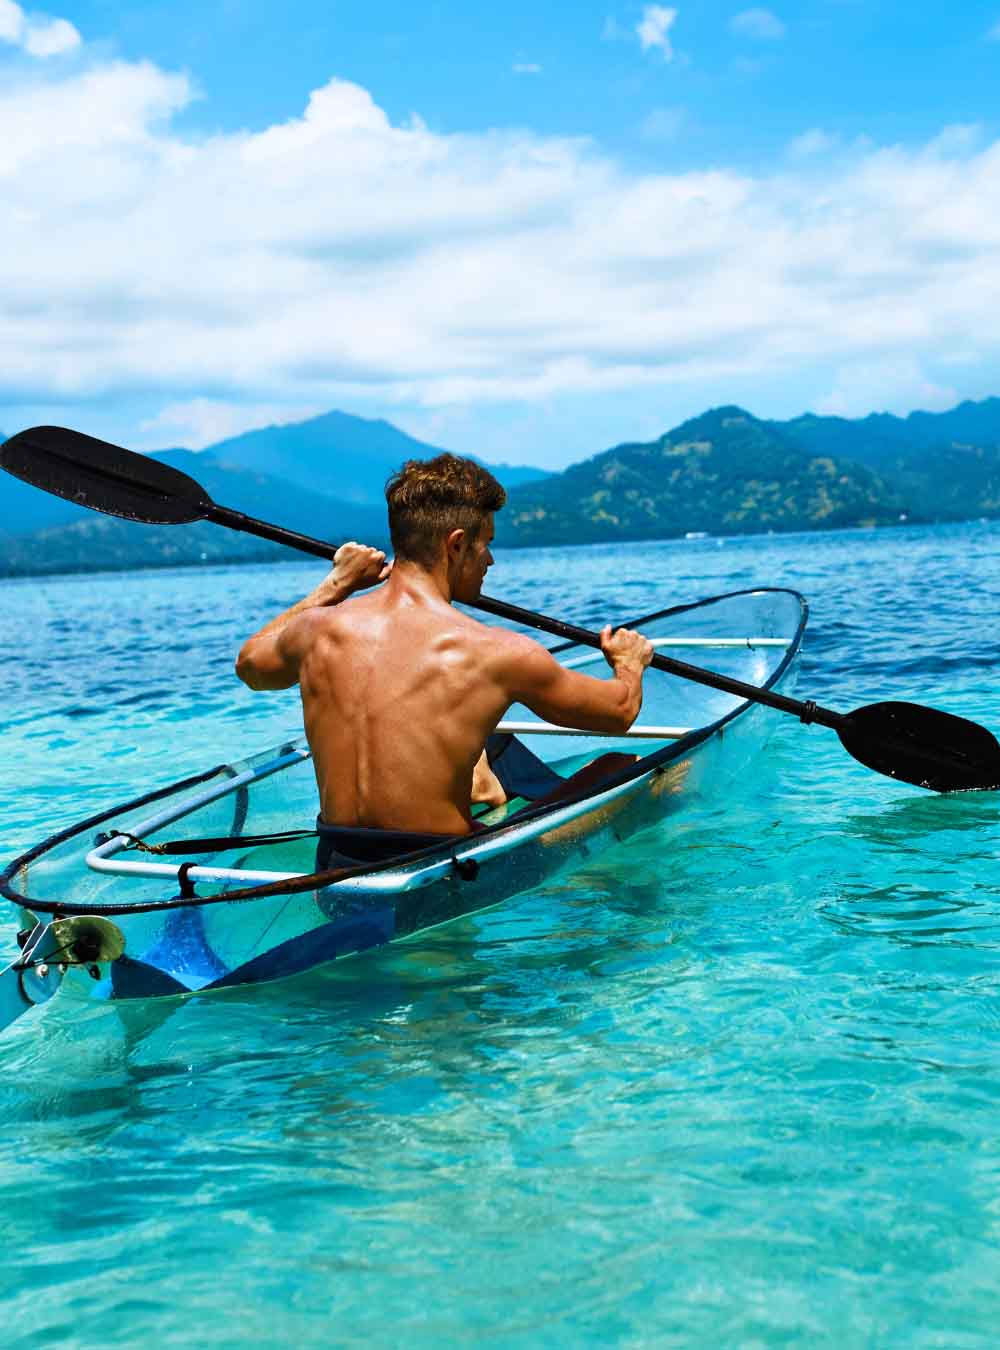 ocean kayaking, best ocean kayak, man kayaking on the sea, blue water kayaking, beast kayaking place in the world, Mabul Island Kayaking, Mabul island outdoor activities